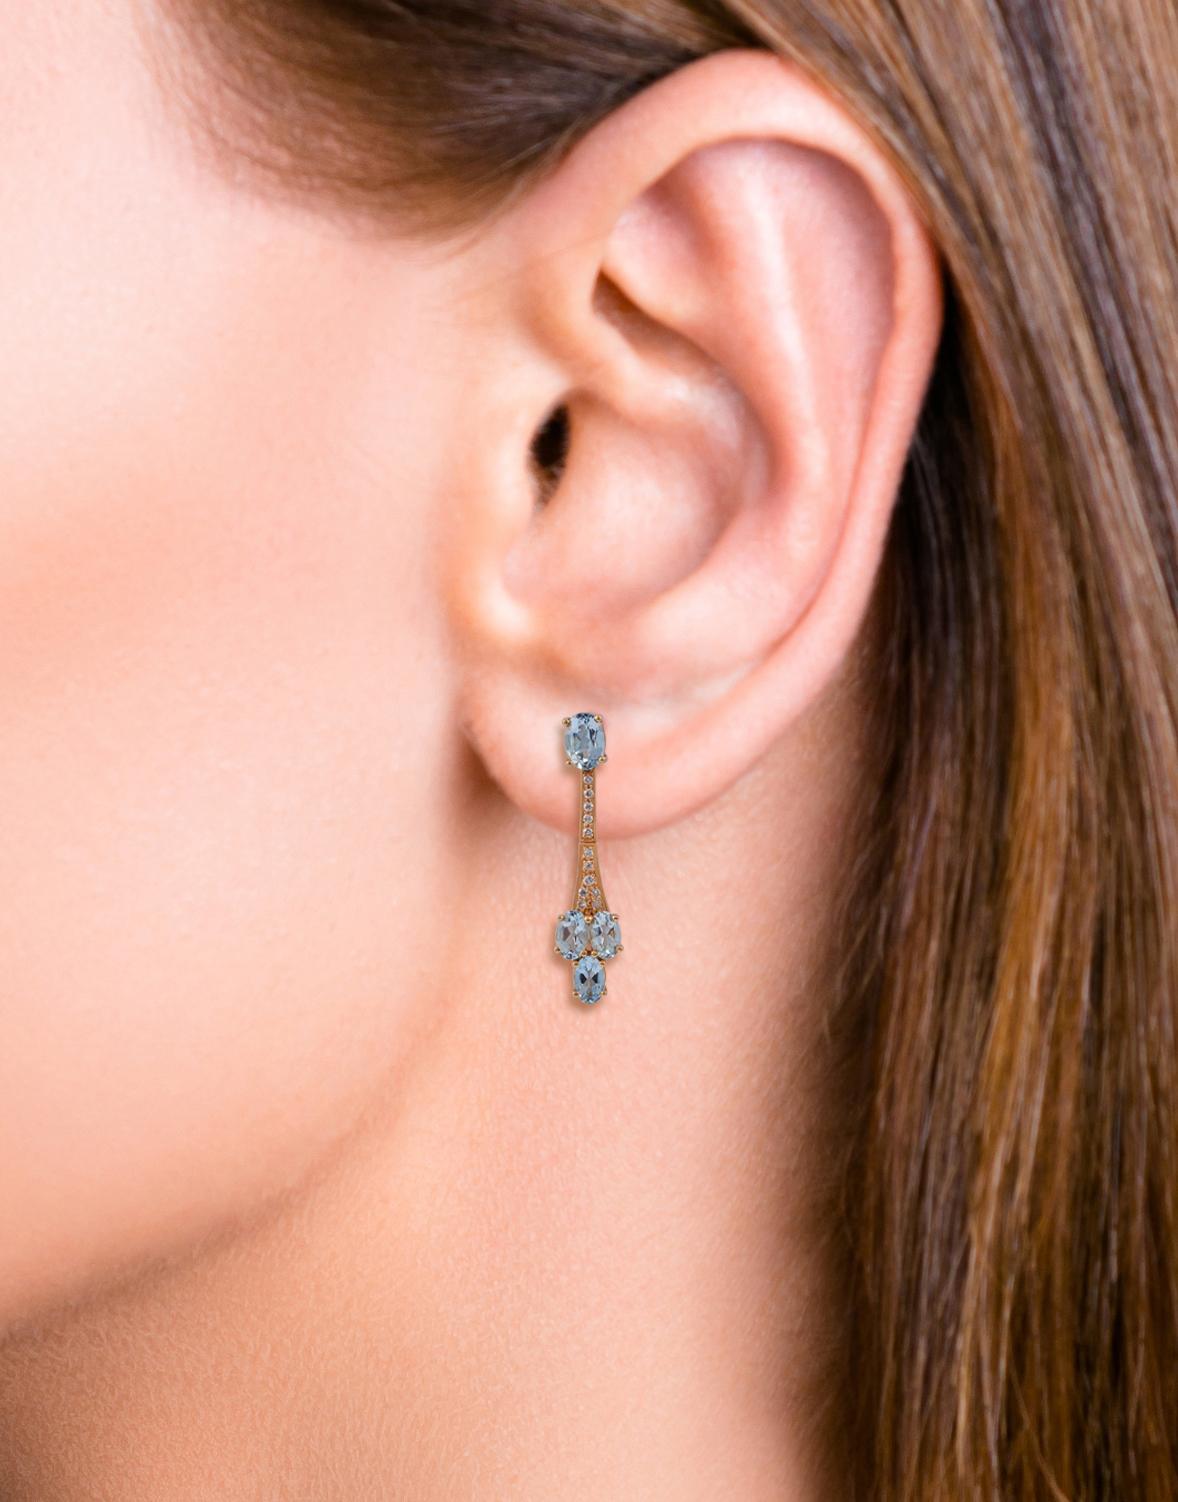 Oval Cut 3.78 Carat Aquamarine & Diamonds Earrings in 18k Gold For Sale